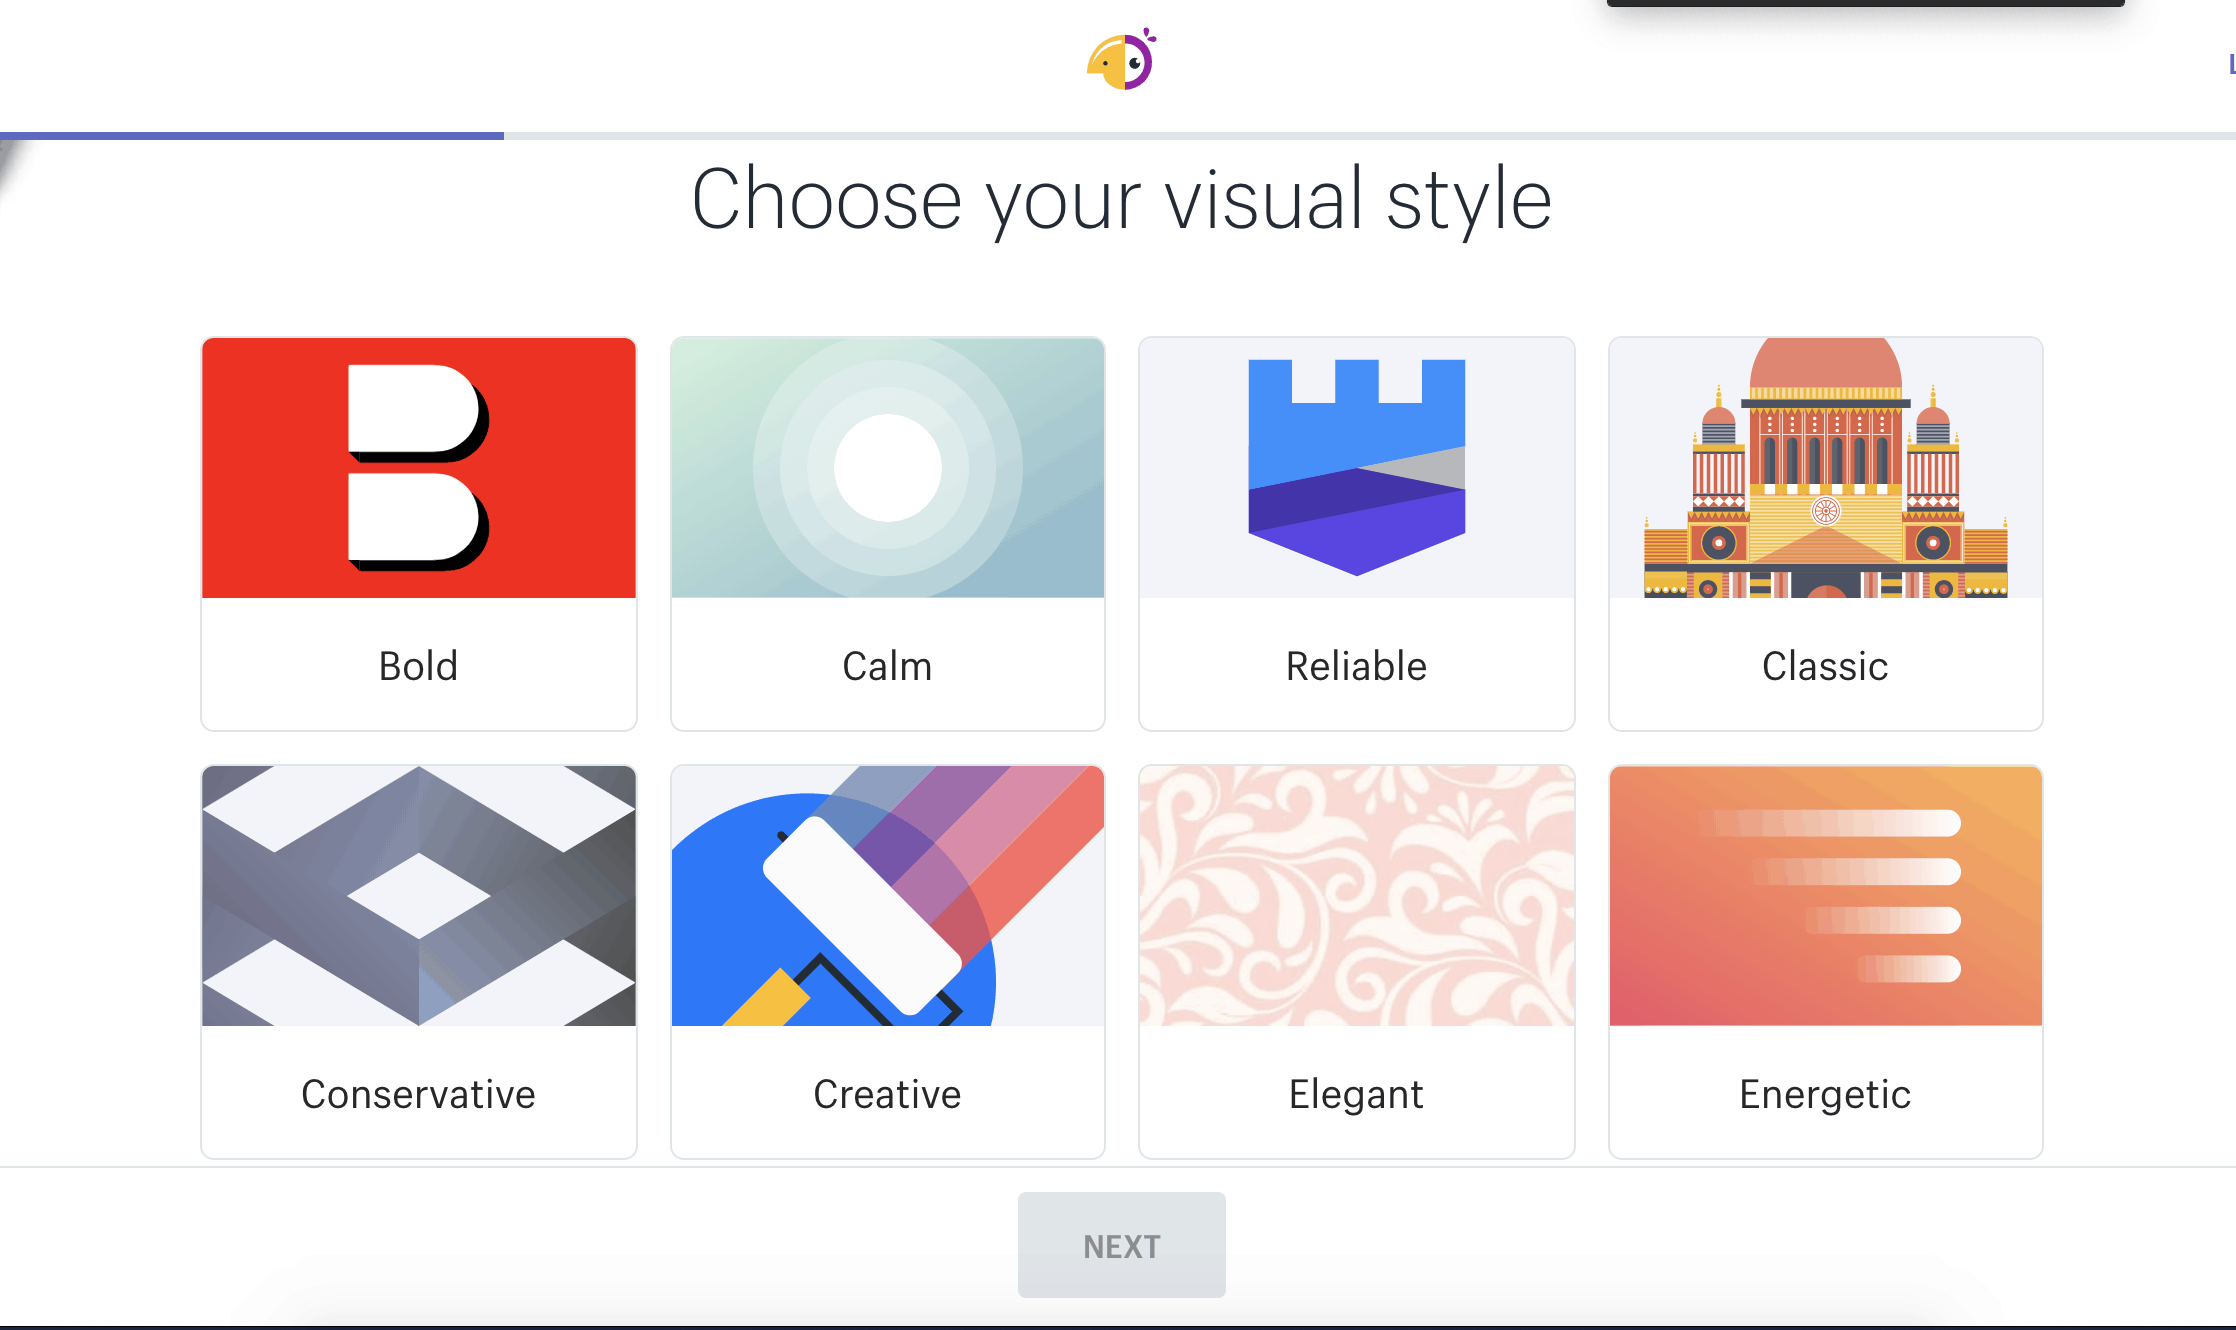 Hatchful free logo maker screenshot - Choose your visual style